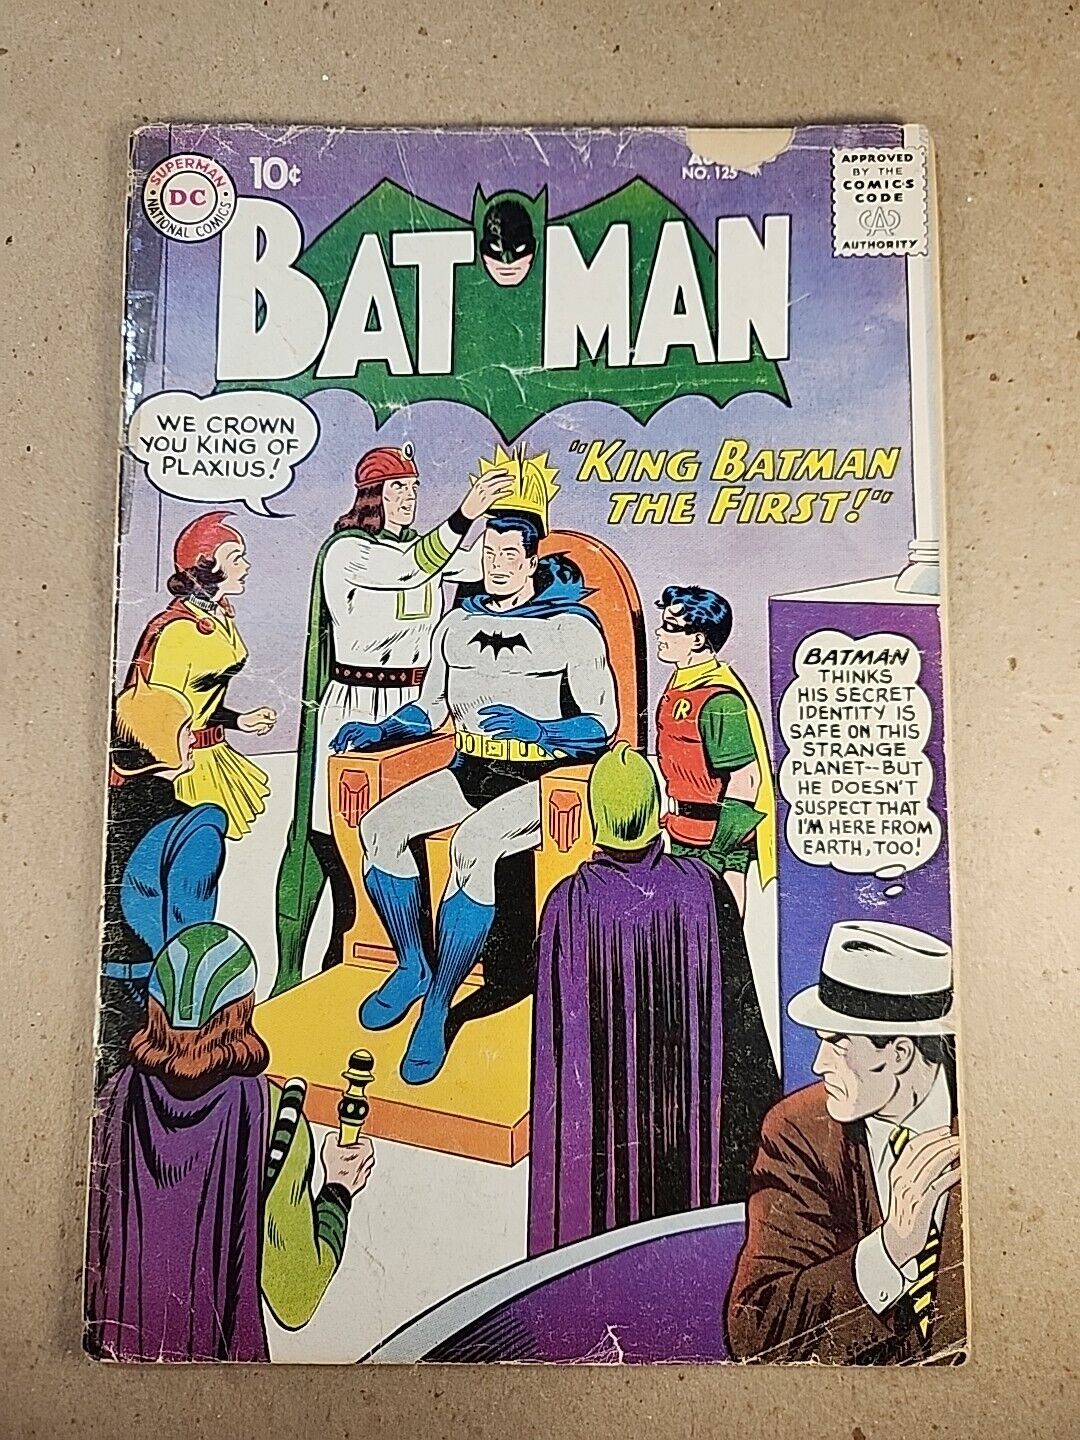 Batman #125 (1959) - Early Silver Age Batman and Robin Batwoman Appearance